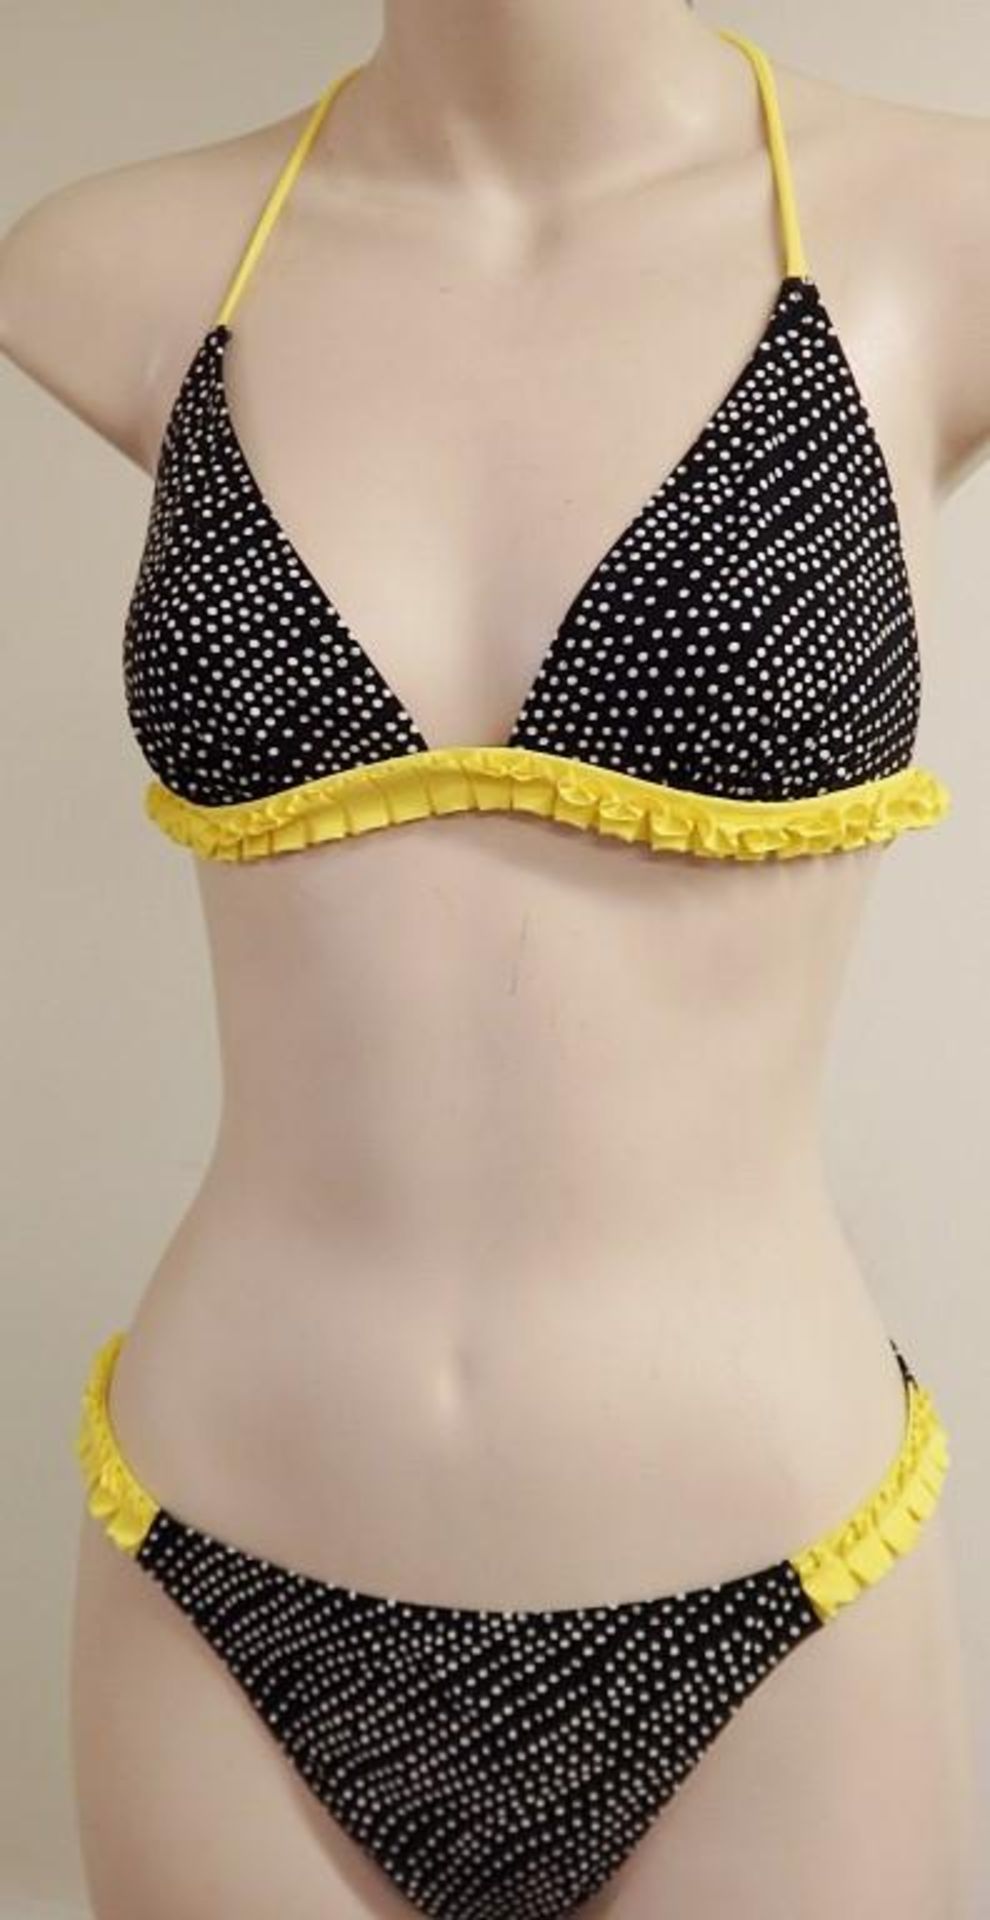 1 x Rasurel - Black Polka dot and Yellow Frill Gold Bikini - R21061 Touquet -Shorty - Size 2 - UK 32